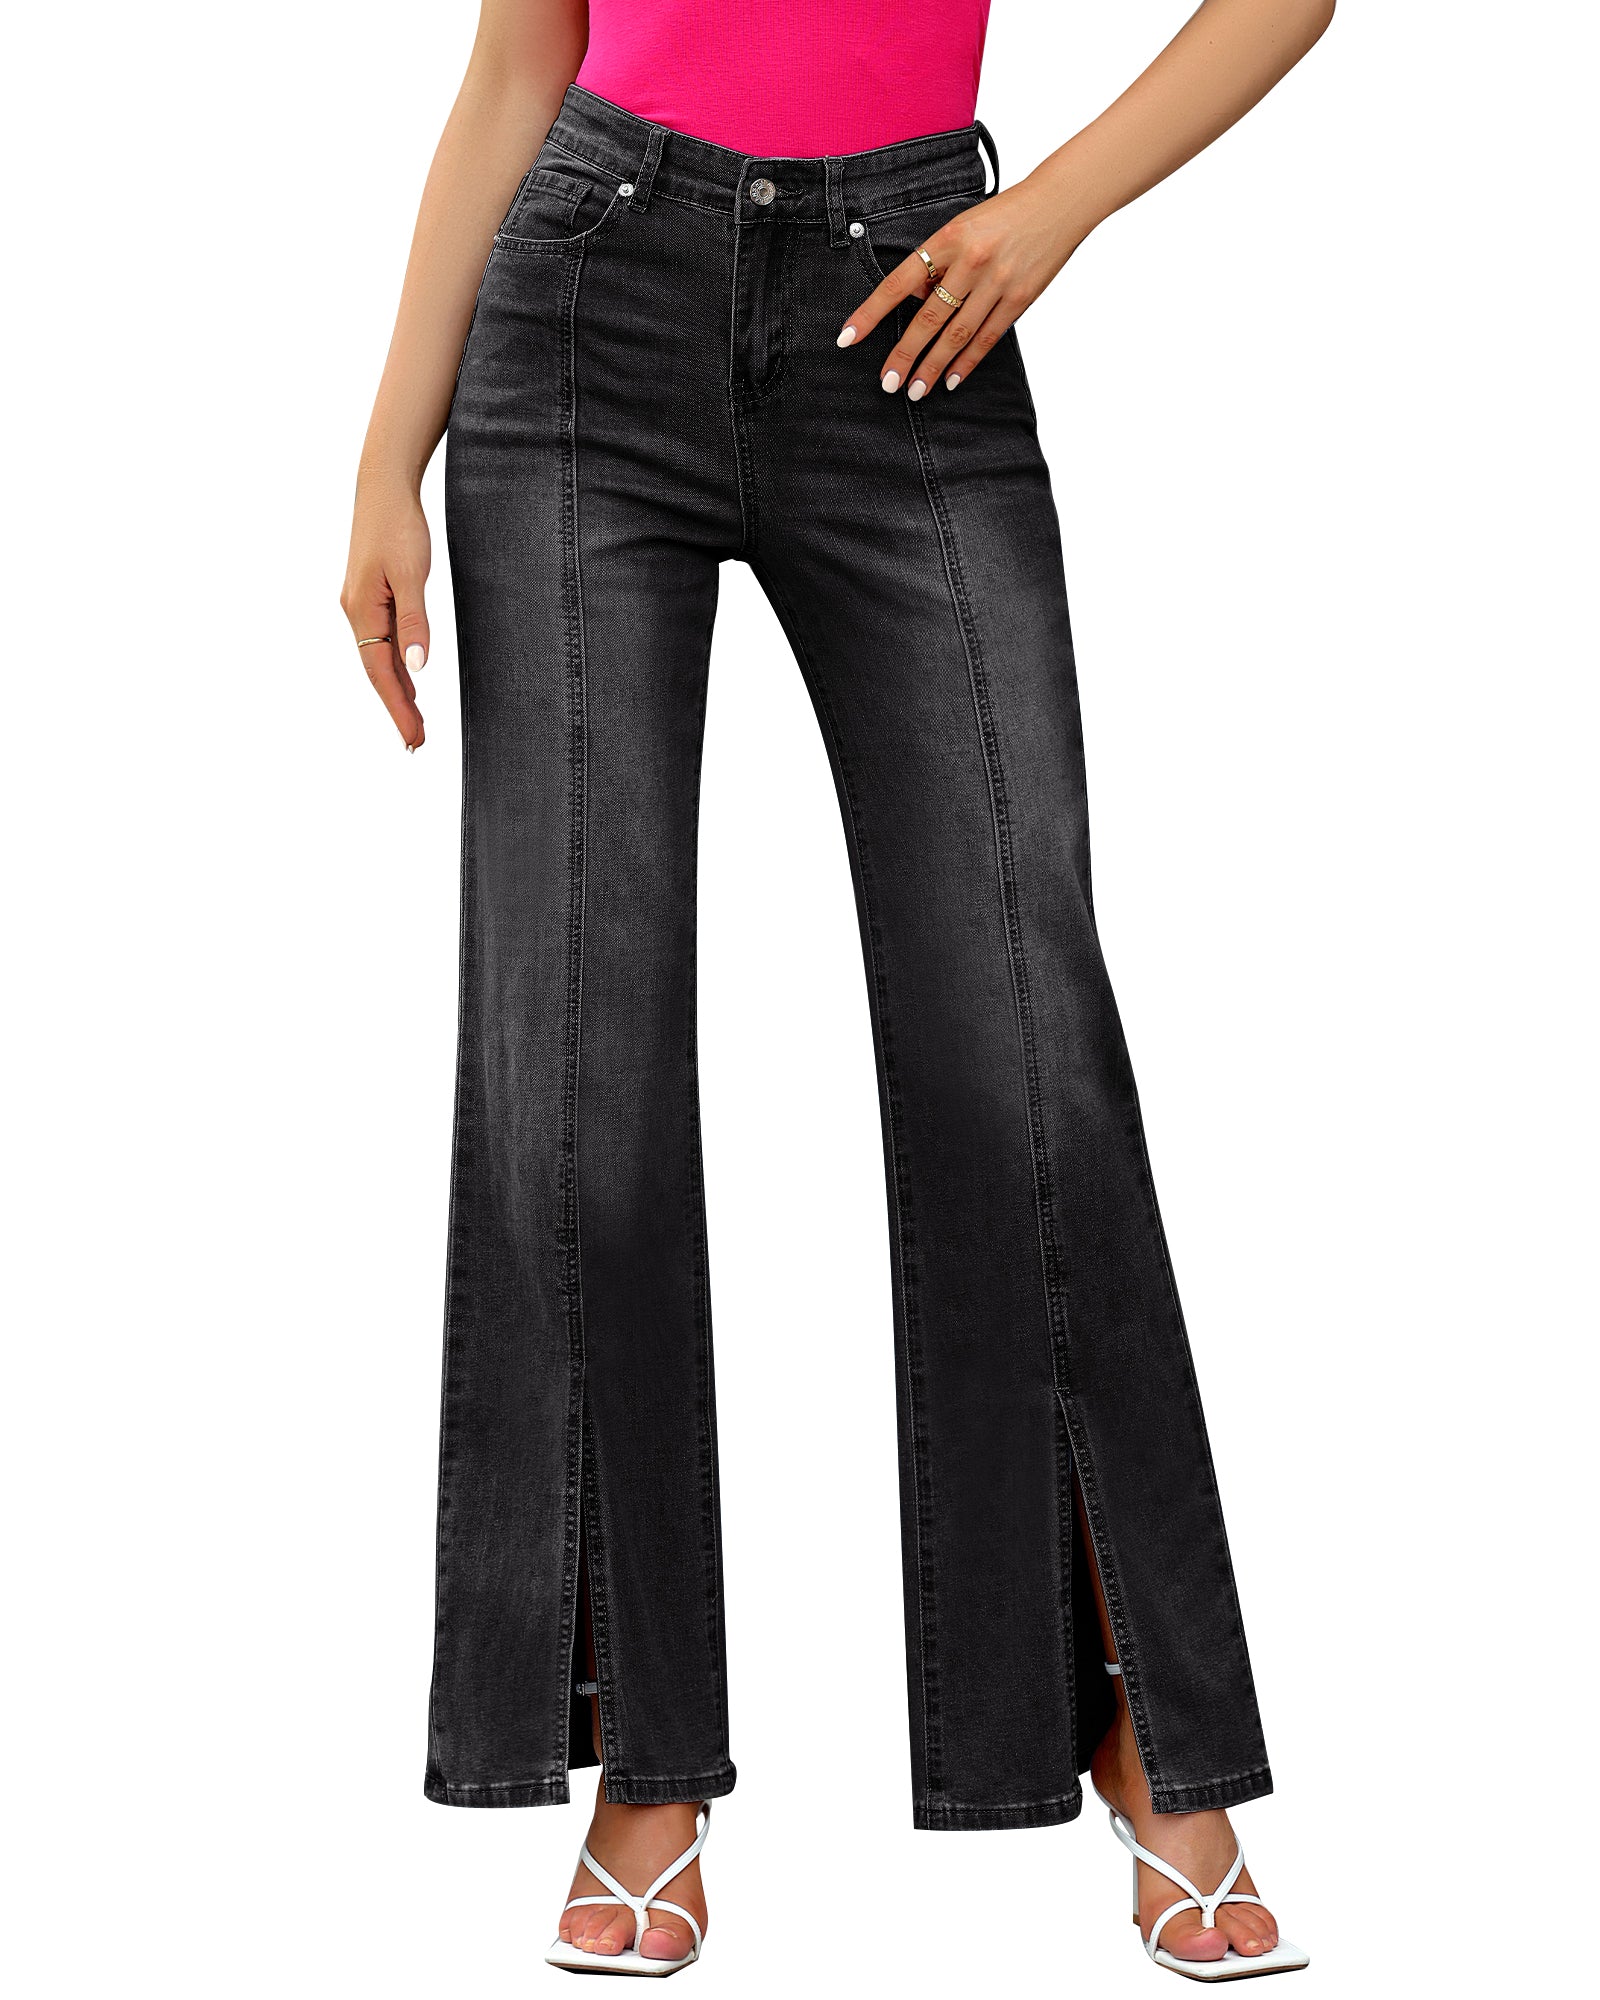 GRAPENT Capris Jeans for Women High Waisted Skinny Stretchy Denim